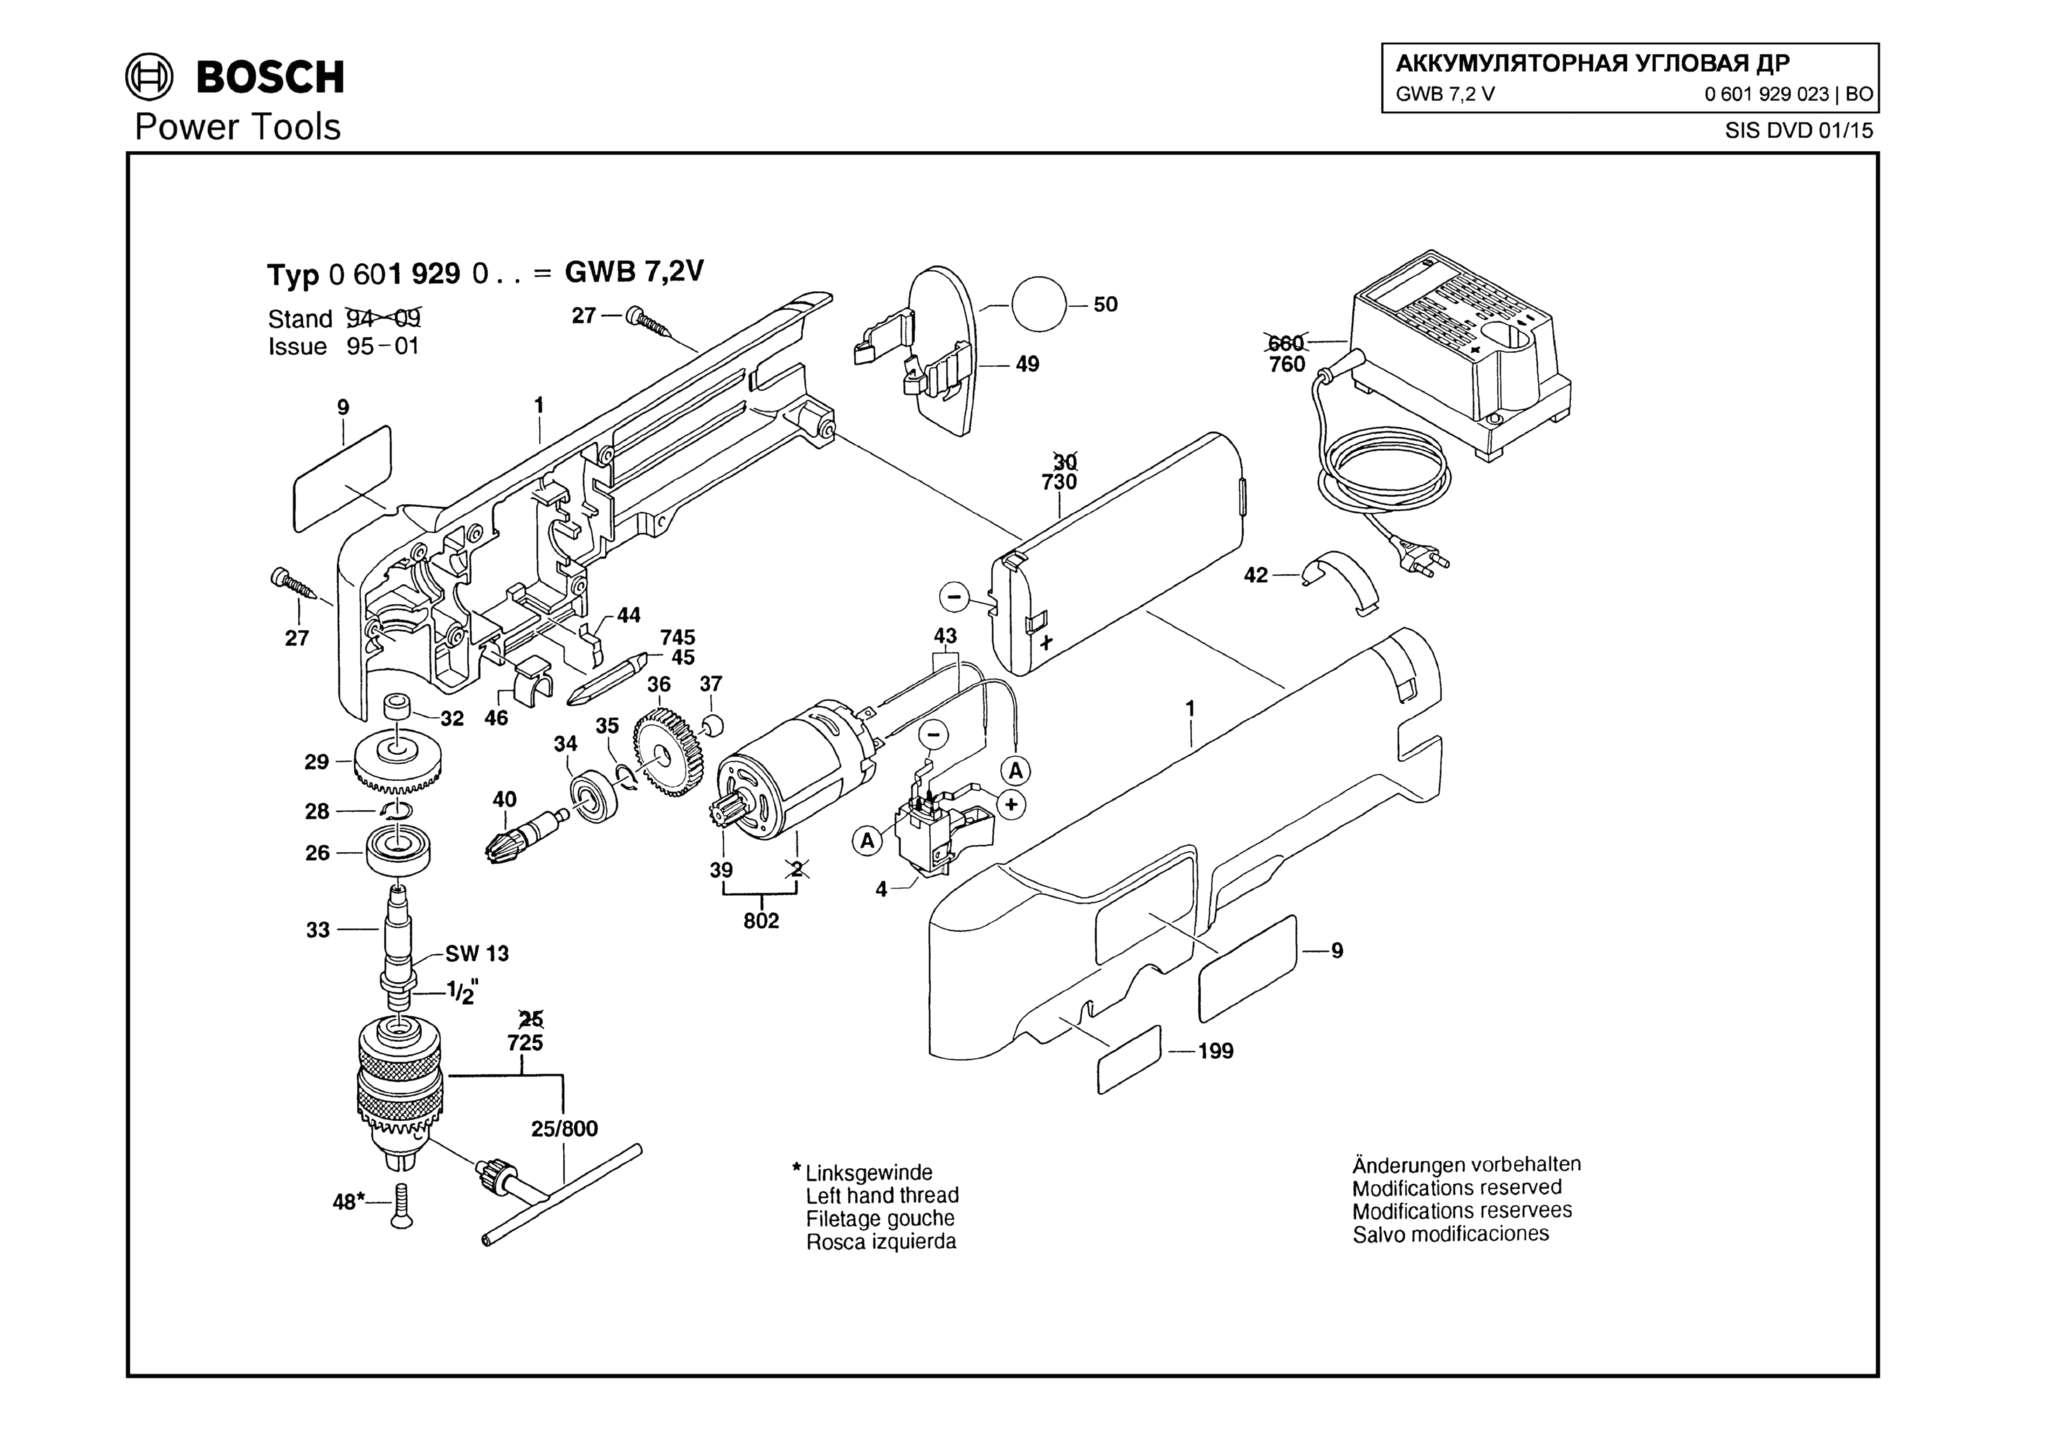 Запчасти, схема и деталировка Bosch GWB 7,2 V (ТИП 0601929023)